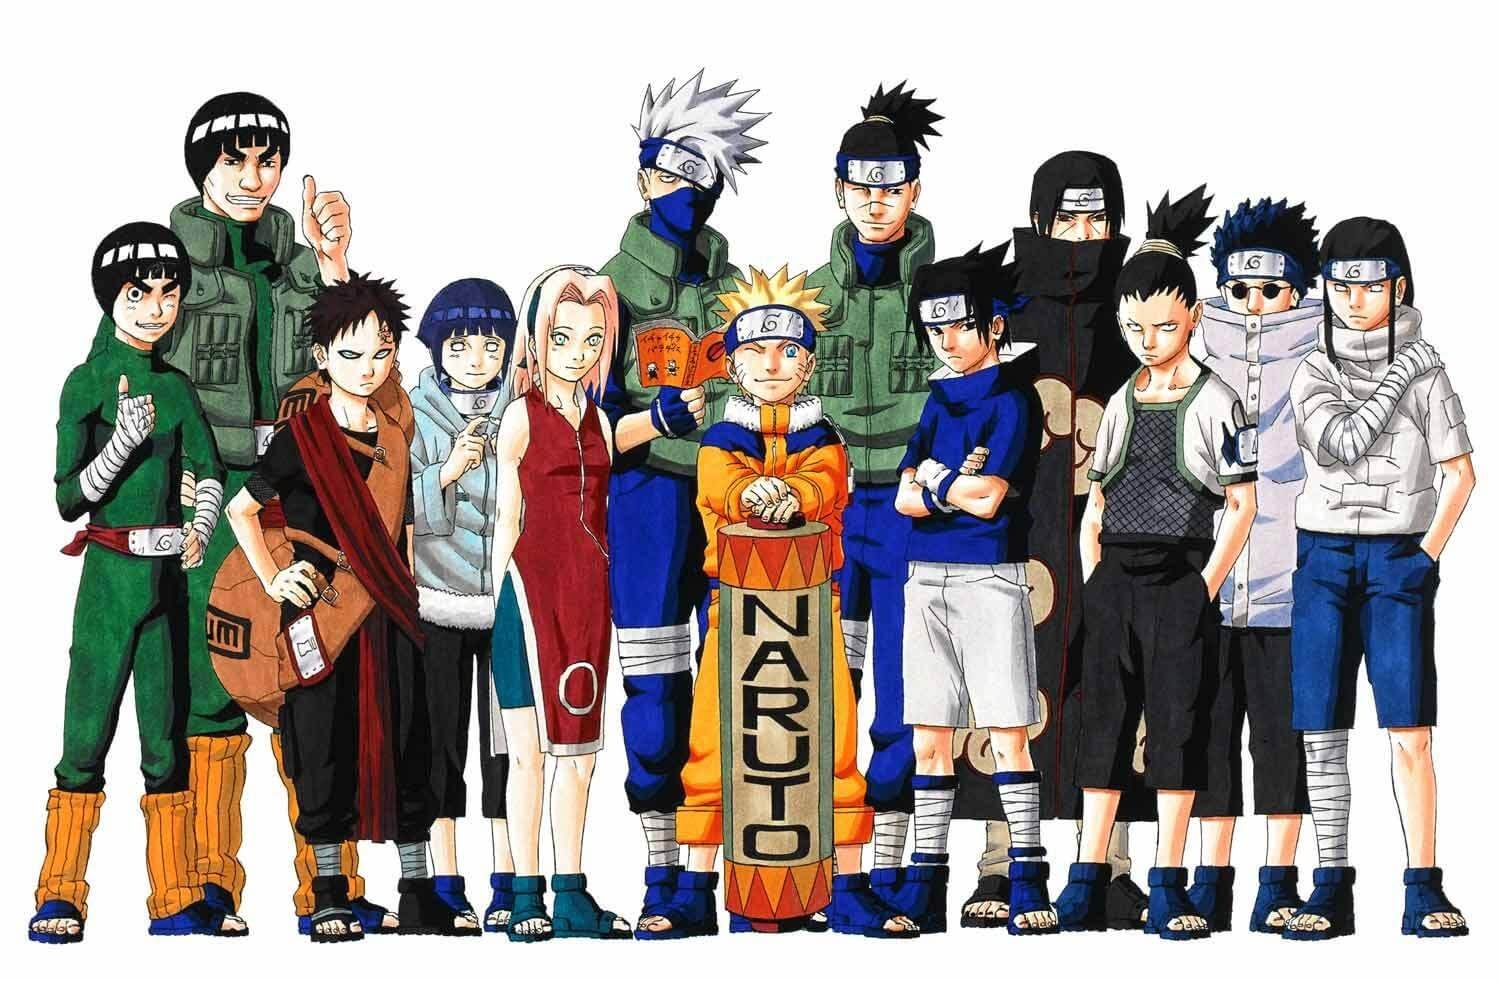 Le sixième manga le plus vendu au Japon : Naruto